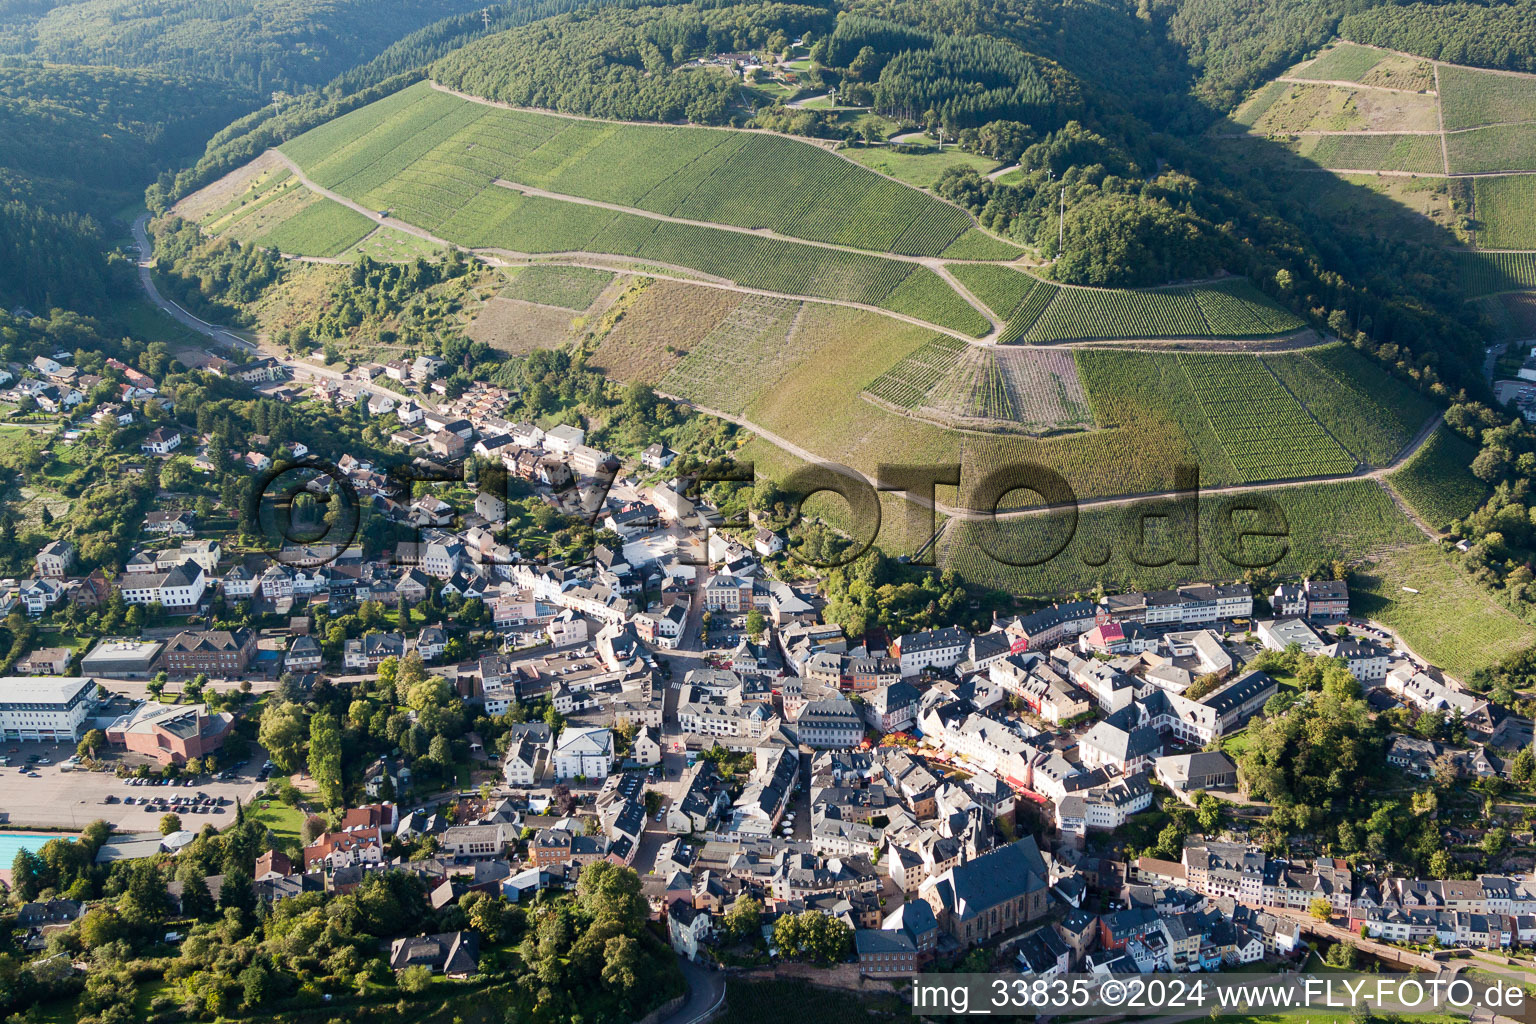 Aerial view of Village on the river bank areas of the Saar in Saarburg in the state Rhineland-Palatinate